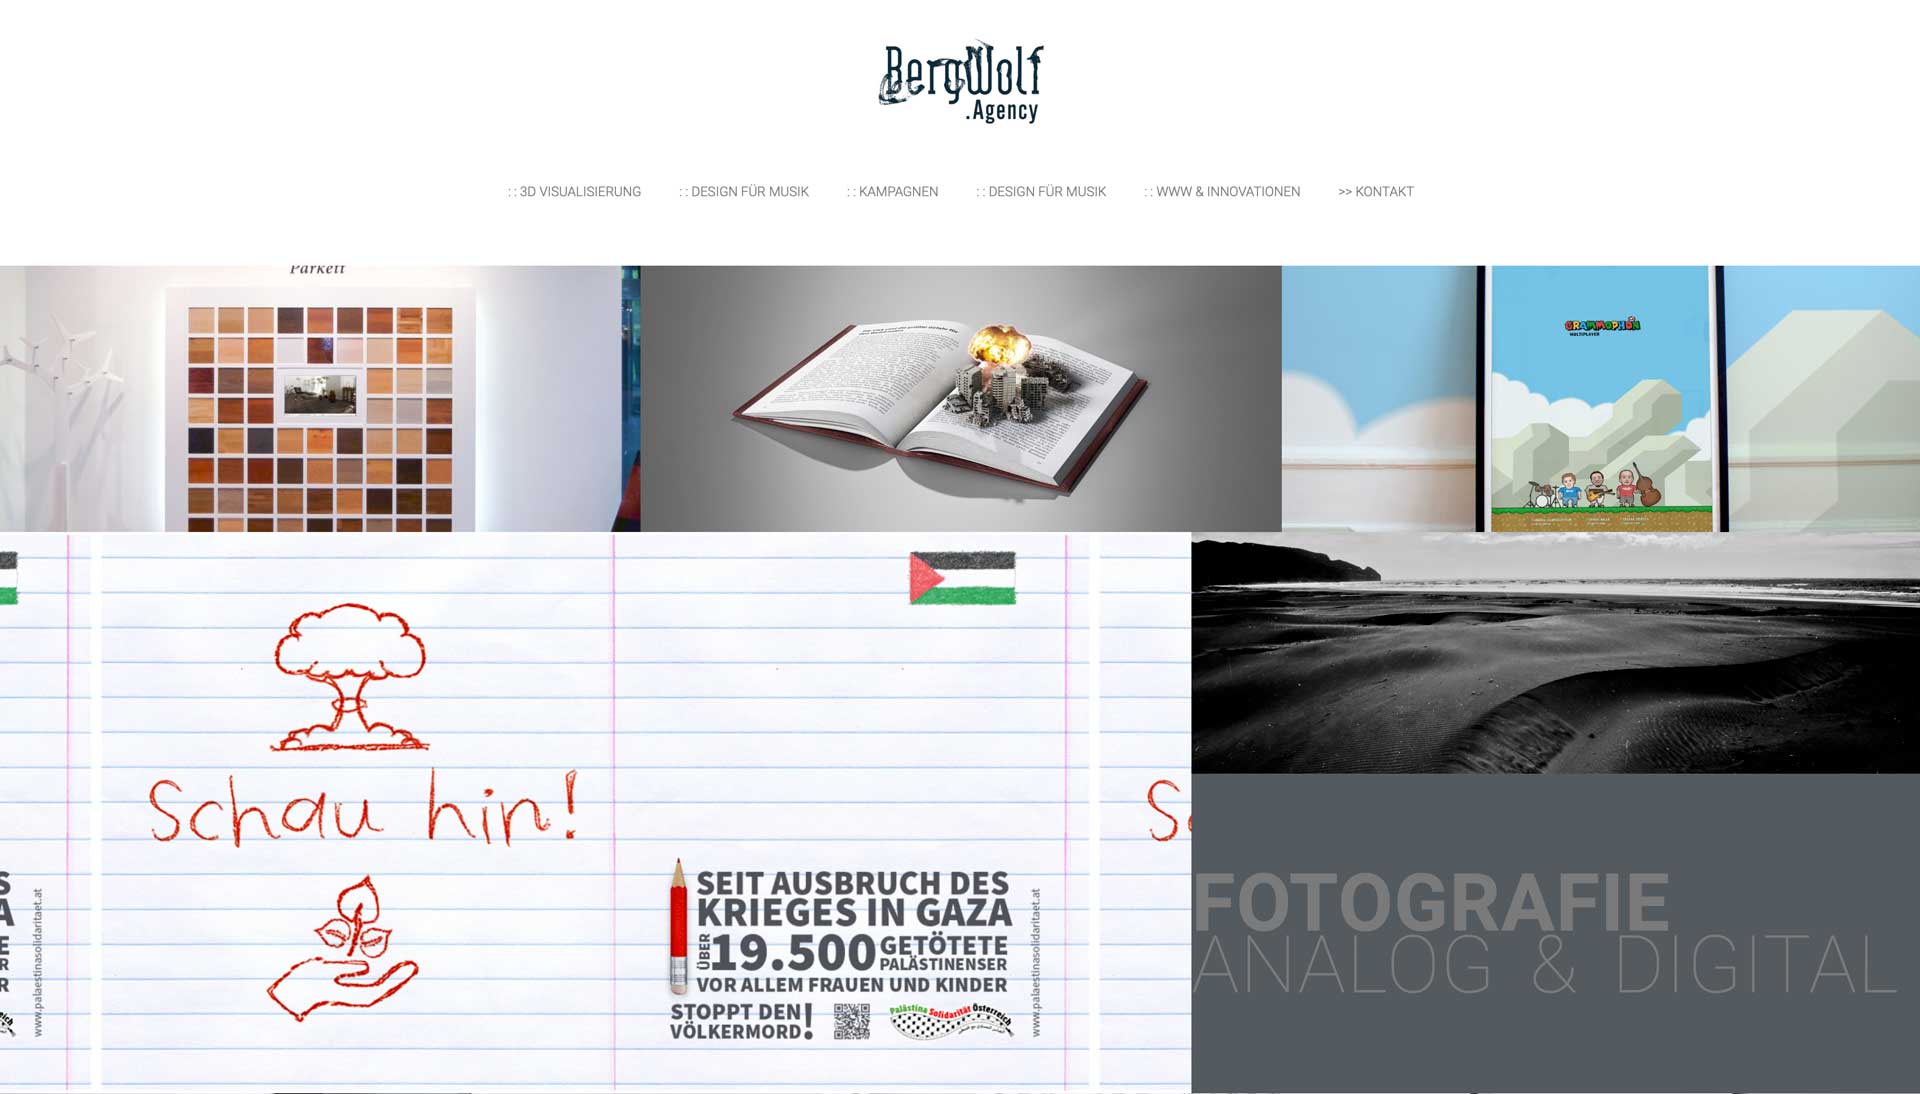 (c) Bergwolf.agency